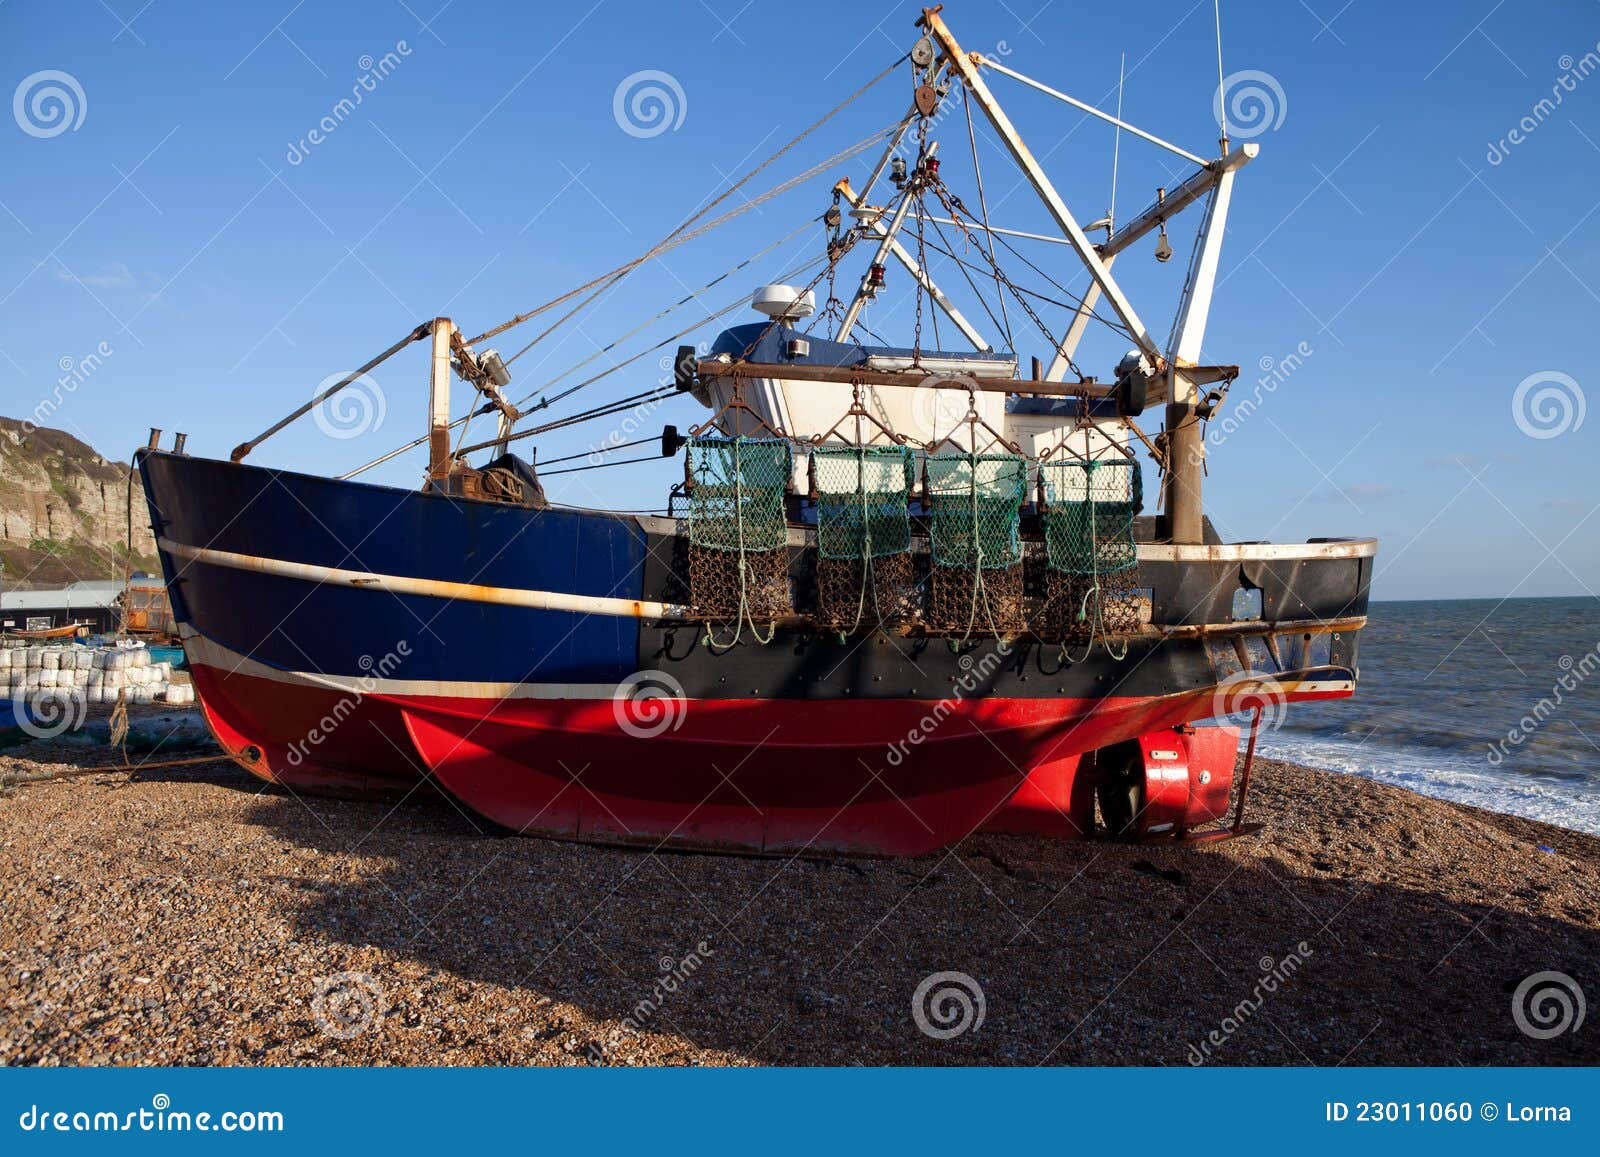 Fishing industry, trawler or fishing boat on the beach in seaside 